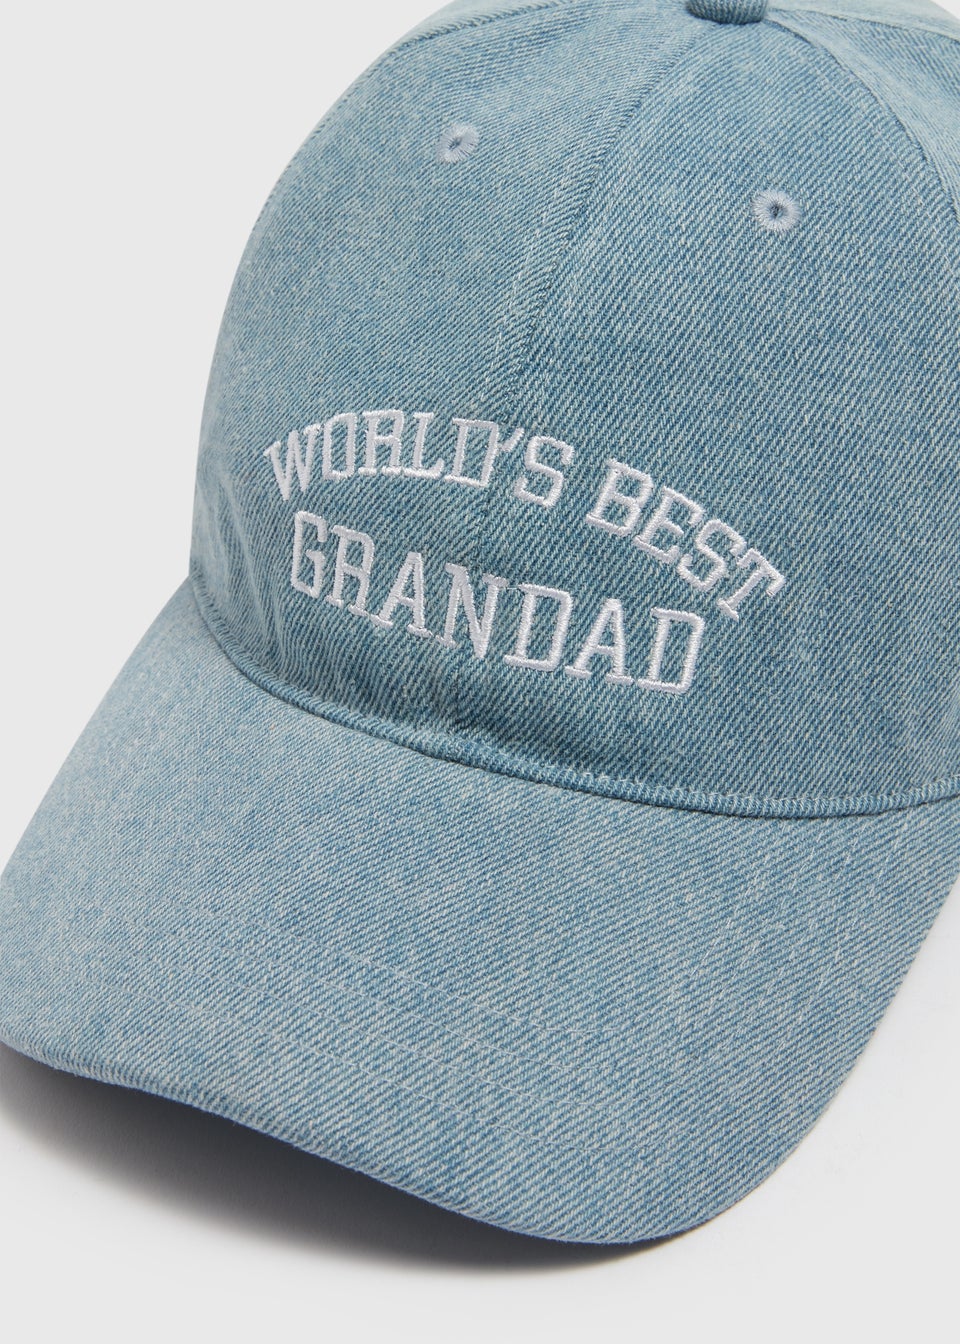 Blue Worlds Best Grandad Cap